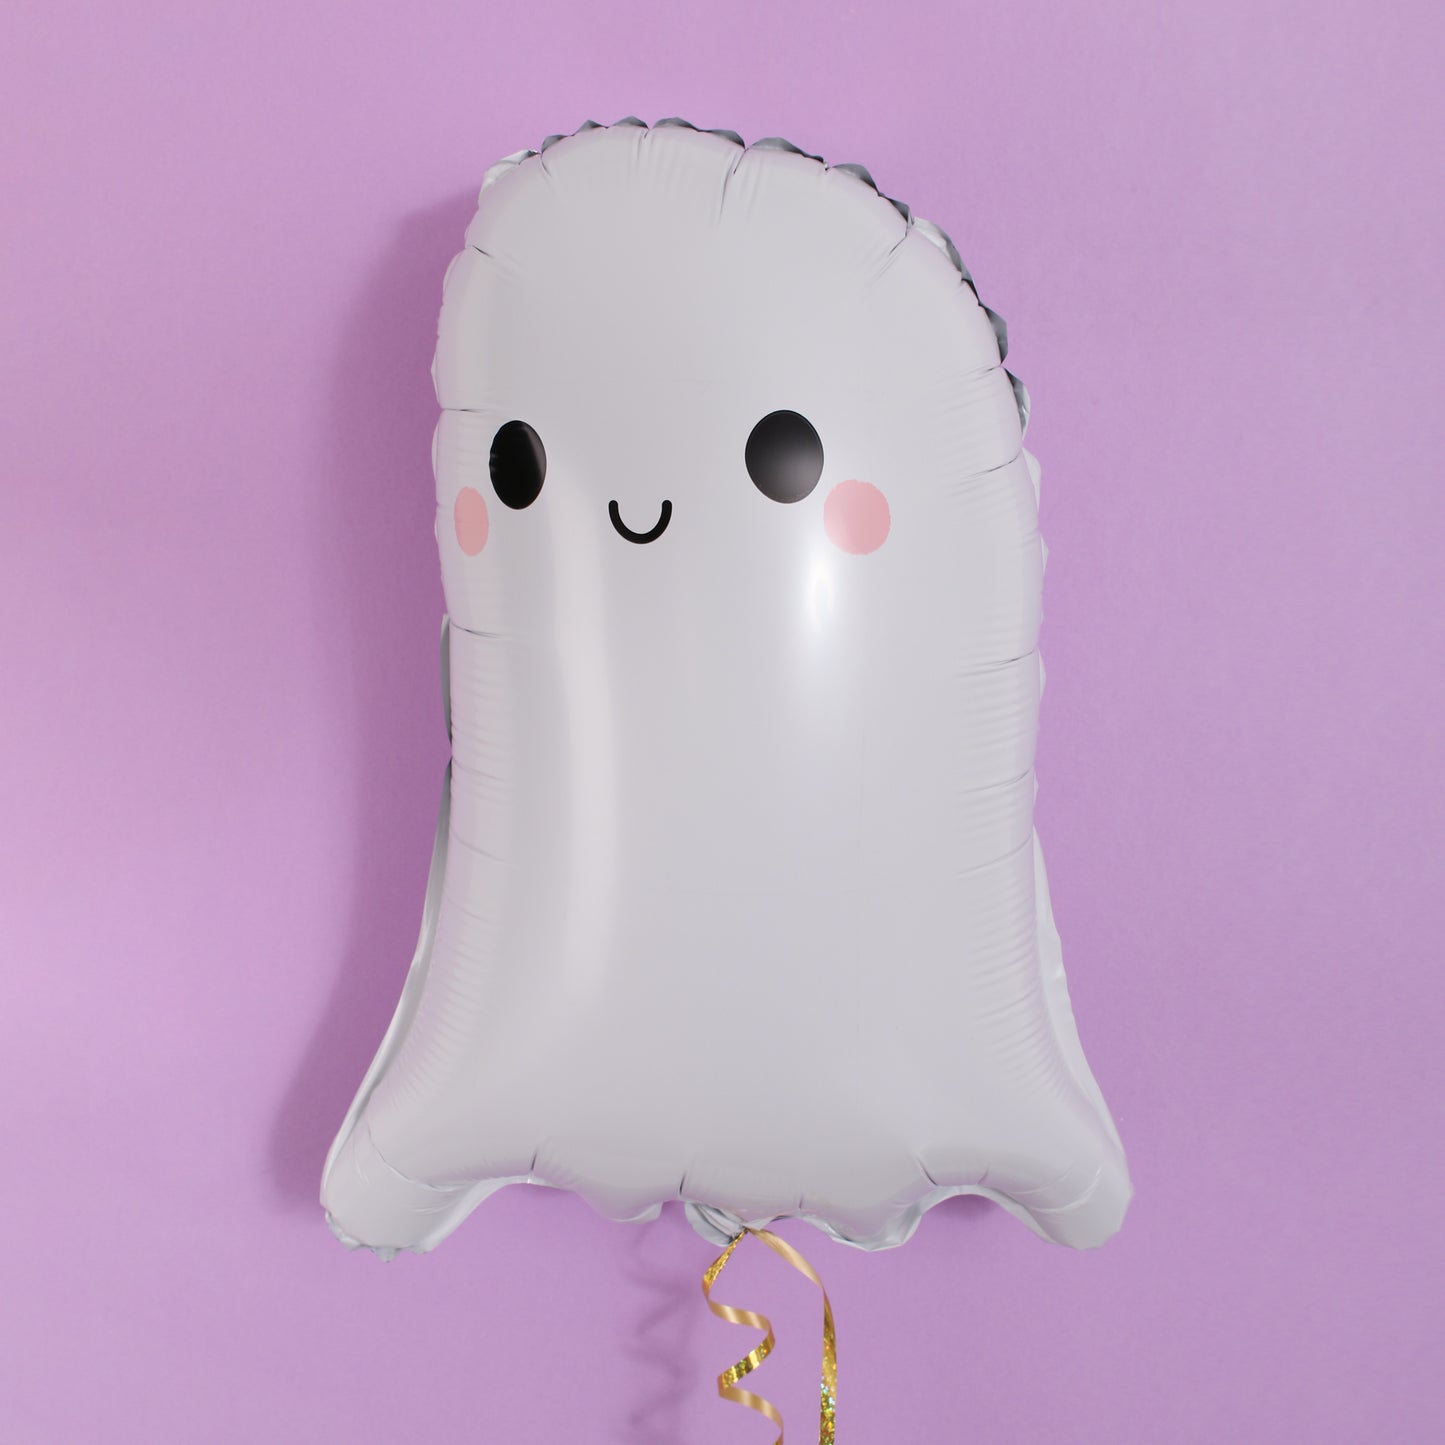 19" Ghost Foil Balloon